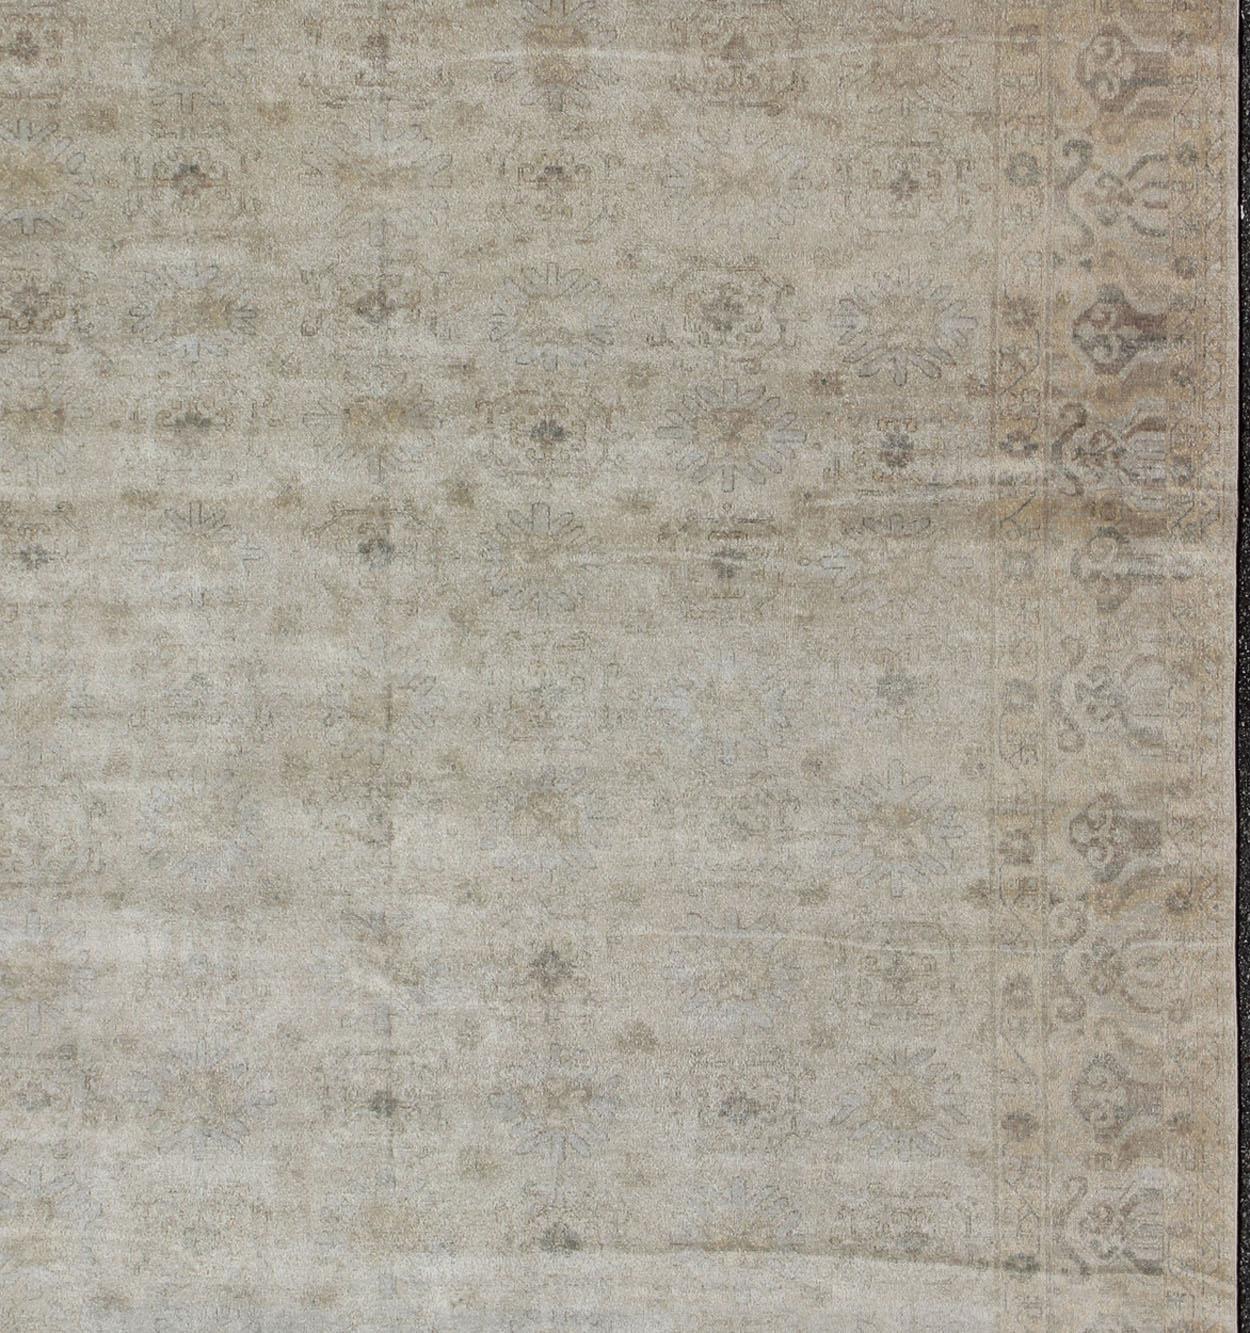 Moderner Khotan-Teppich, Teppich OB-9413619-592009, Herkunftsland / Typ: Indien / Khotan, ca. Anfang 21. Jahrhundert.

Maße: 12'0 x 15'0.